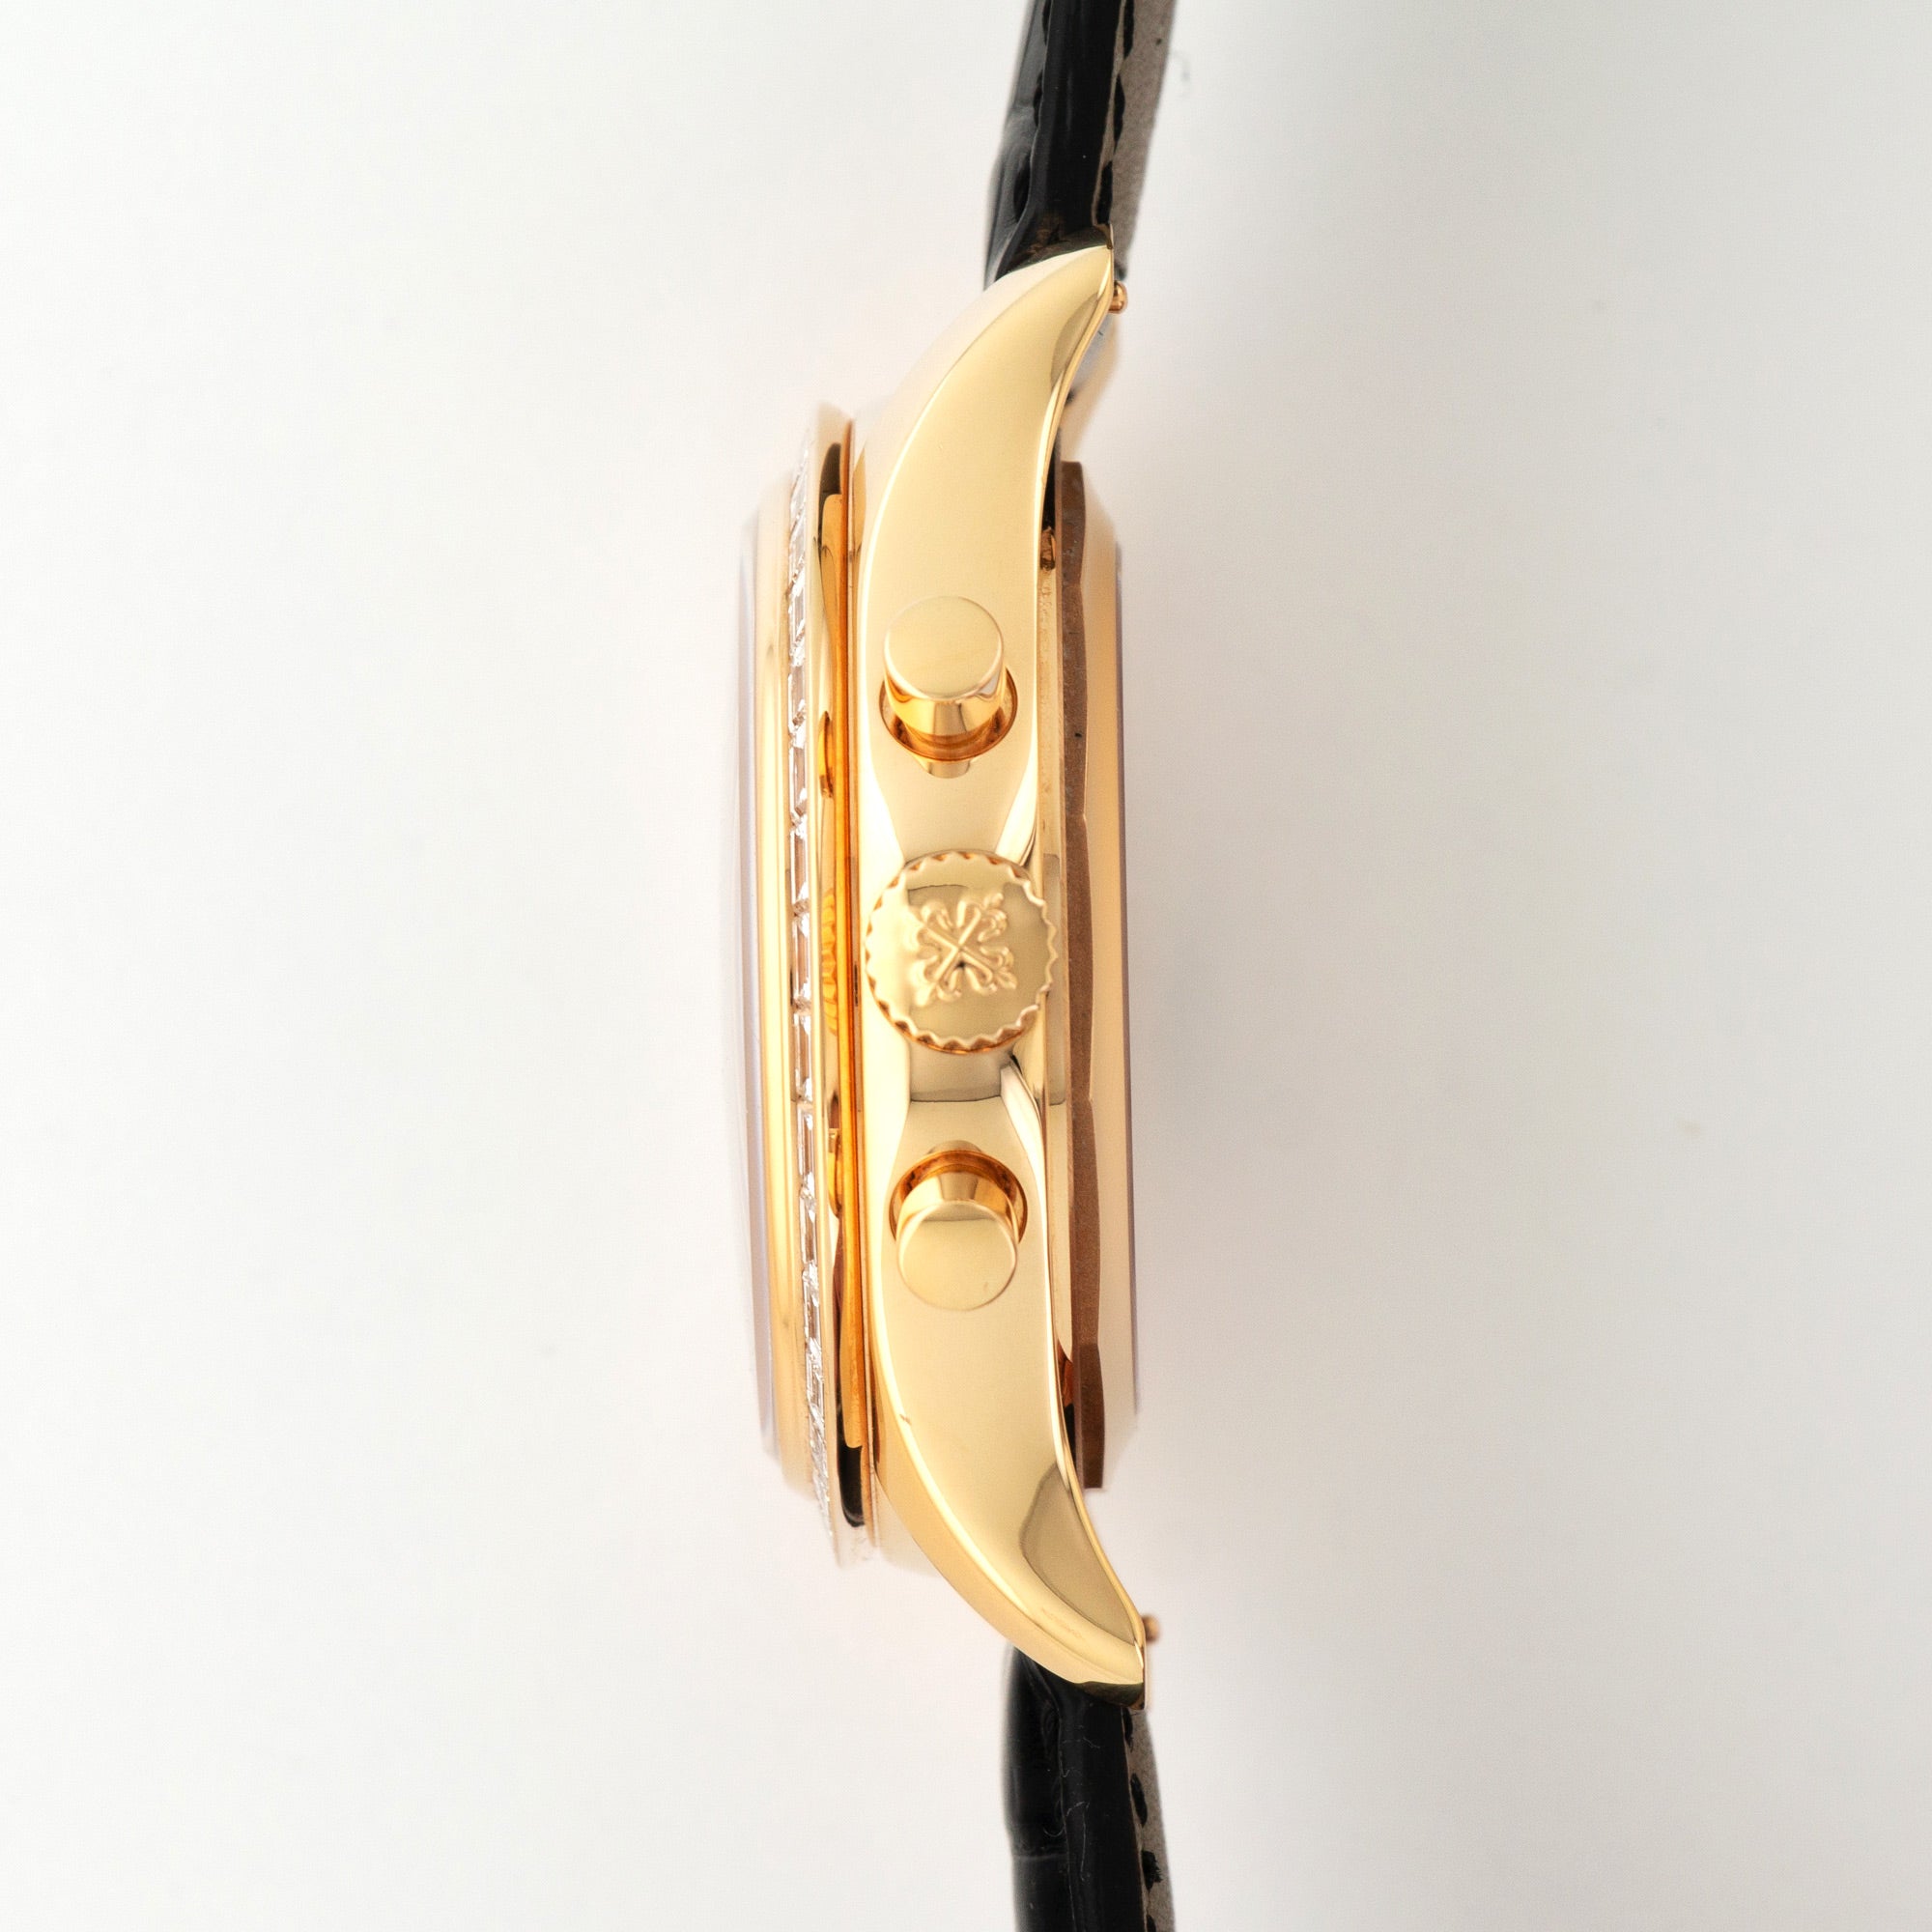 Patek Philippe - Patek Philippe Rose Gold Chronograph Baguette Watch Ref. 5961 - The Keystone Watches